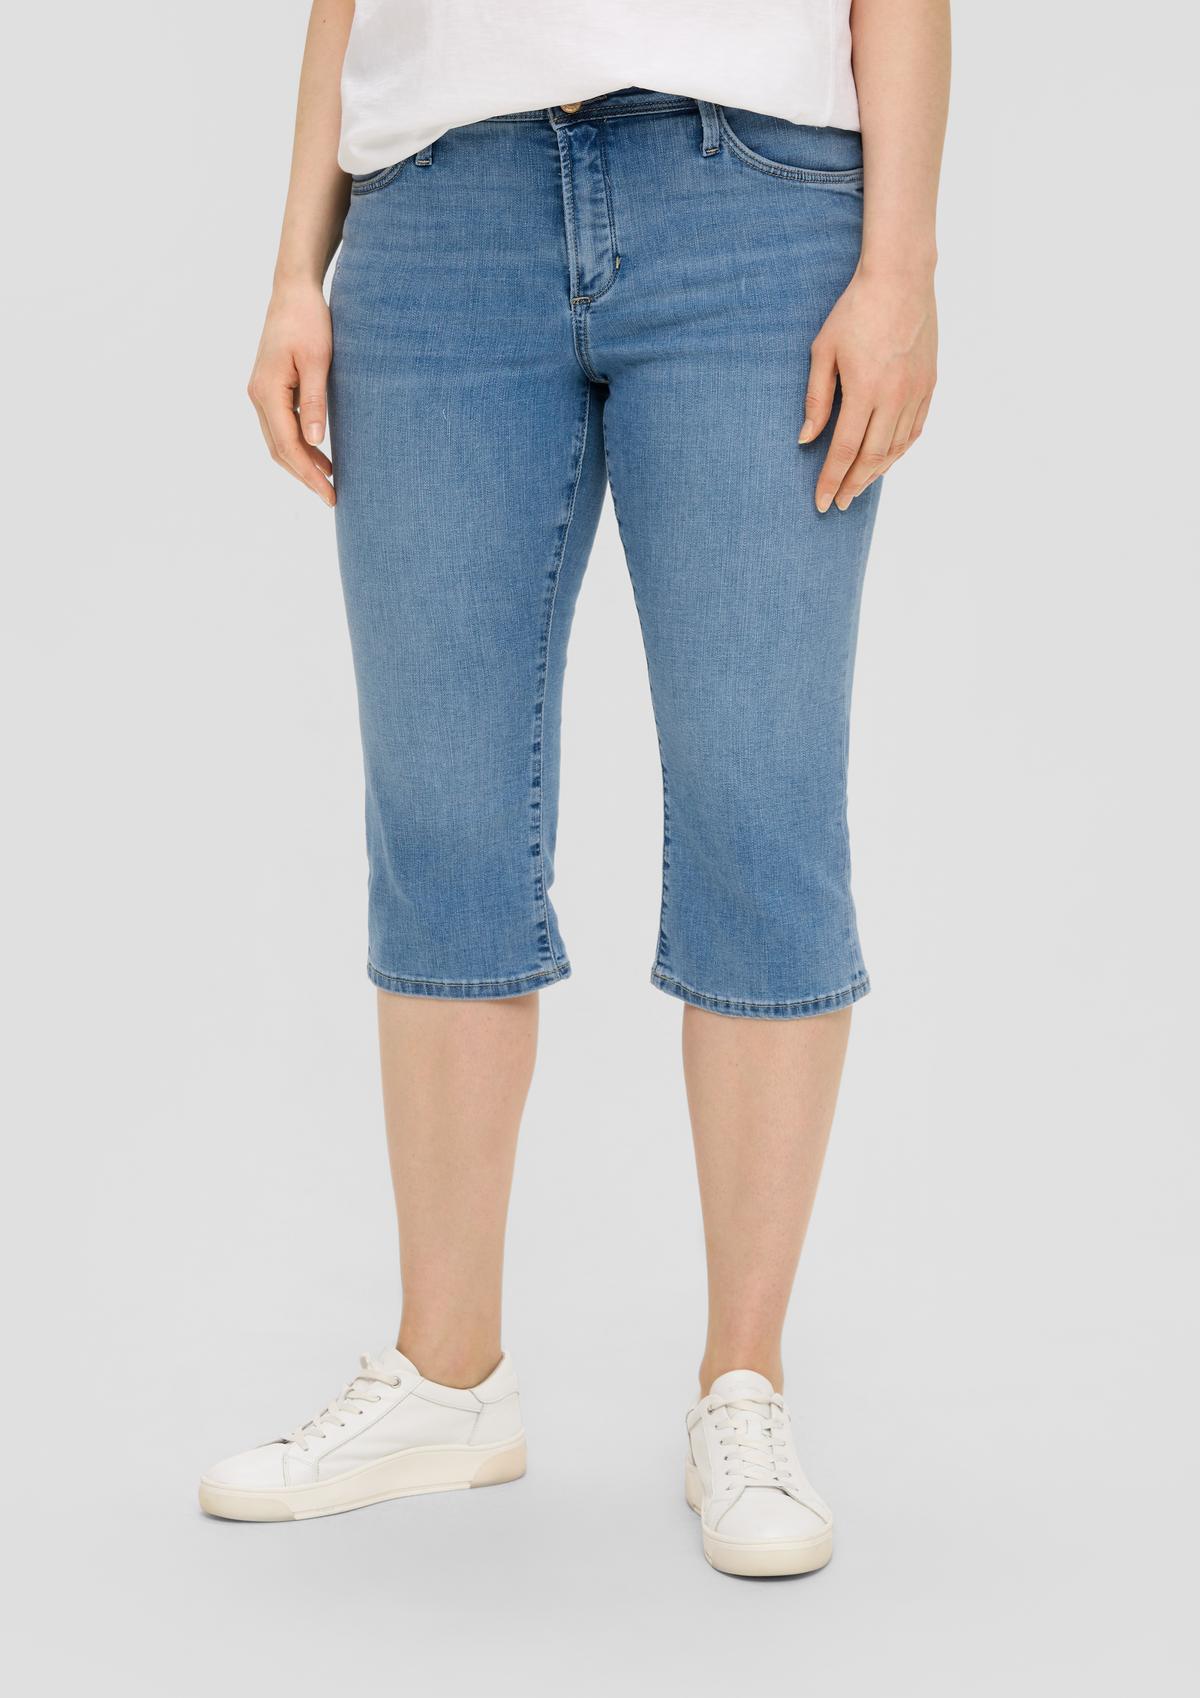 s.Oliver Capri-jeans / regular fit / mid rise / slim leg